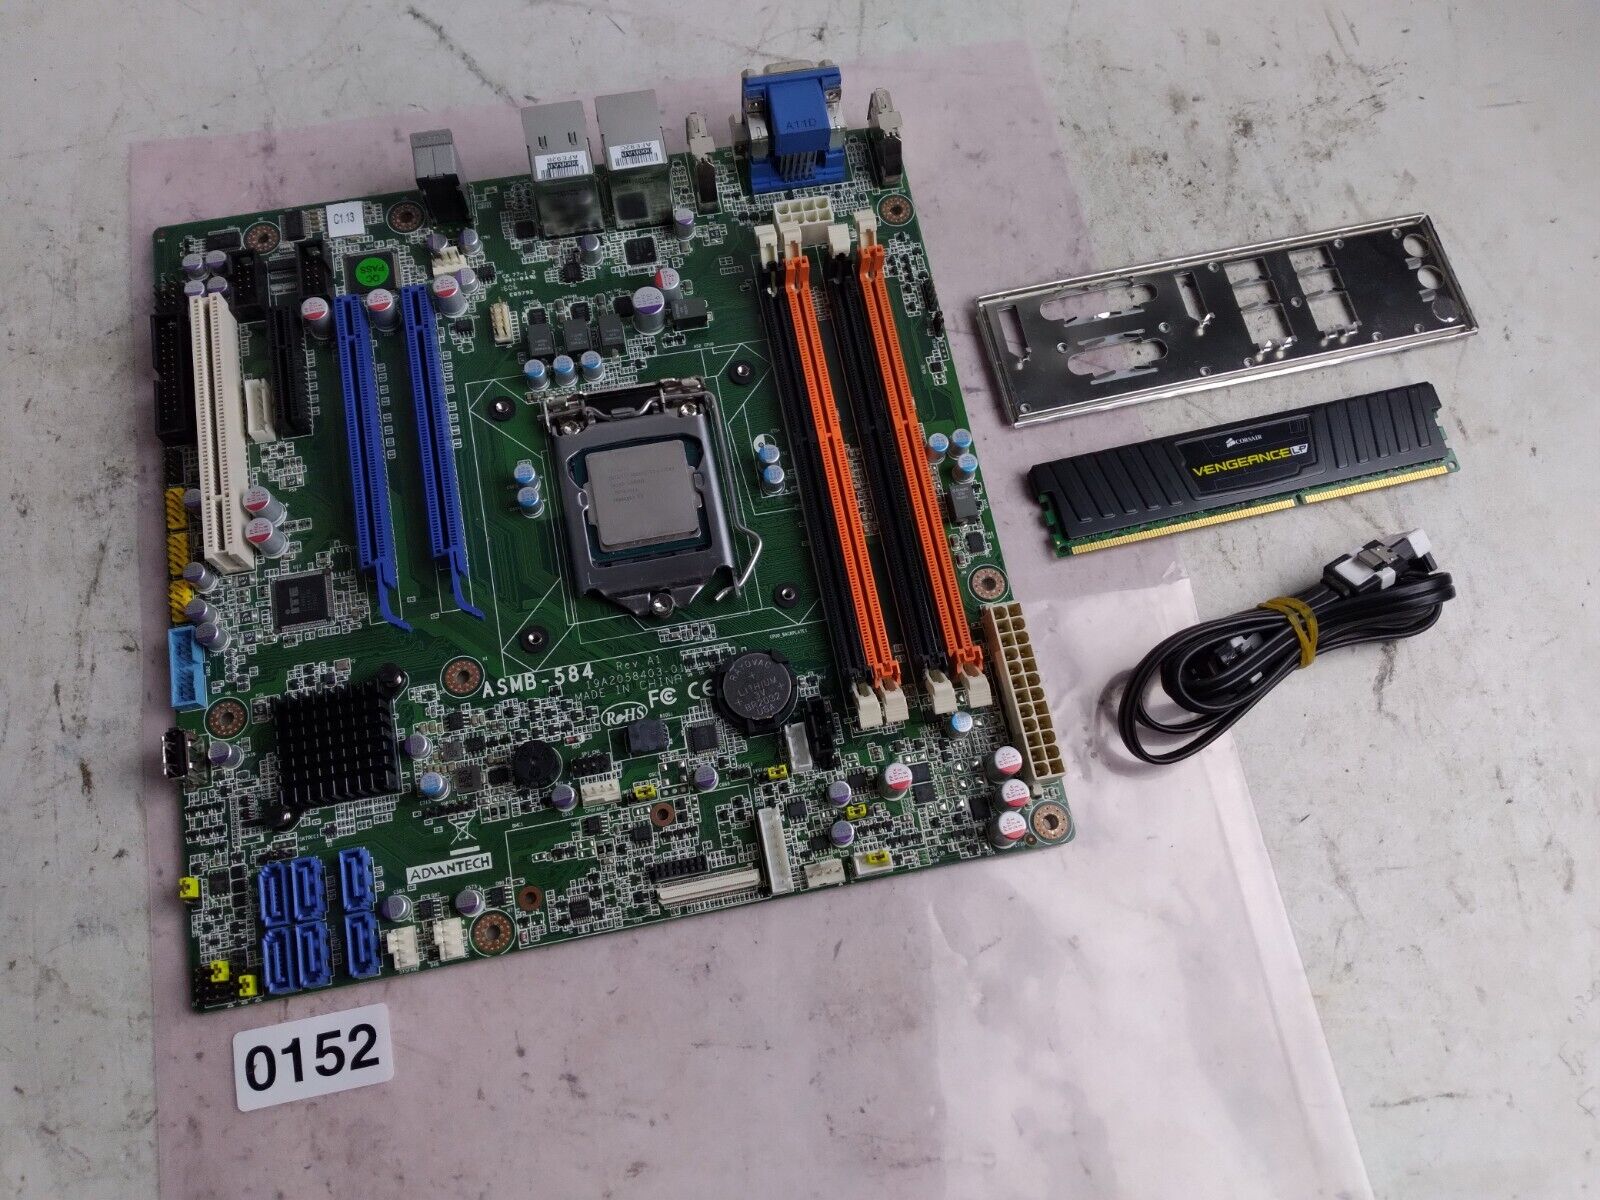 ADVANTECH ASMB-584 w/Xeon E3-1275 v3@3.50 Ghz, 8GB RAM, 2x SATA Cables & IO